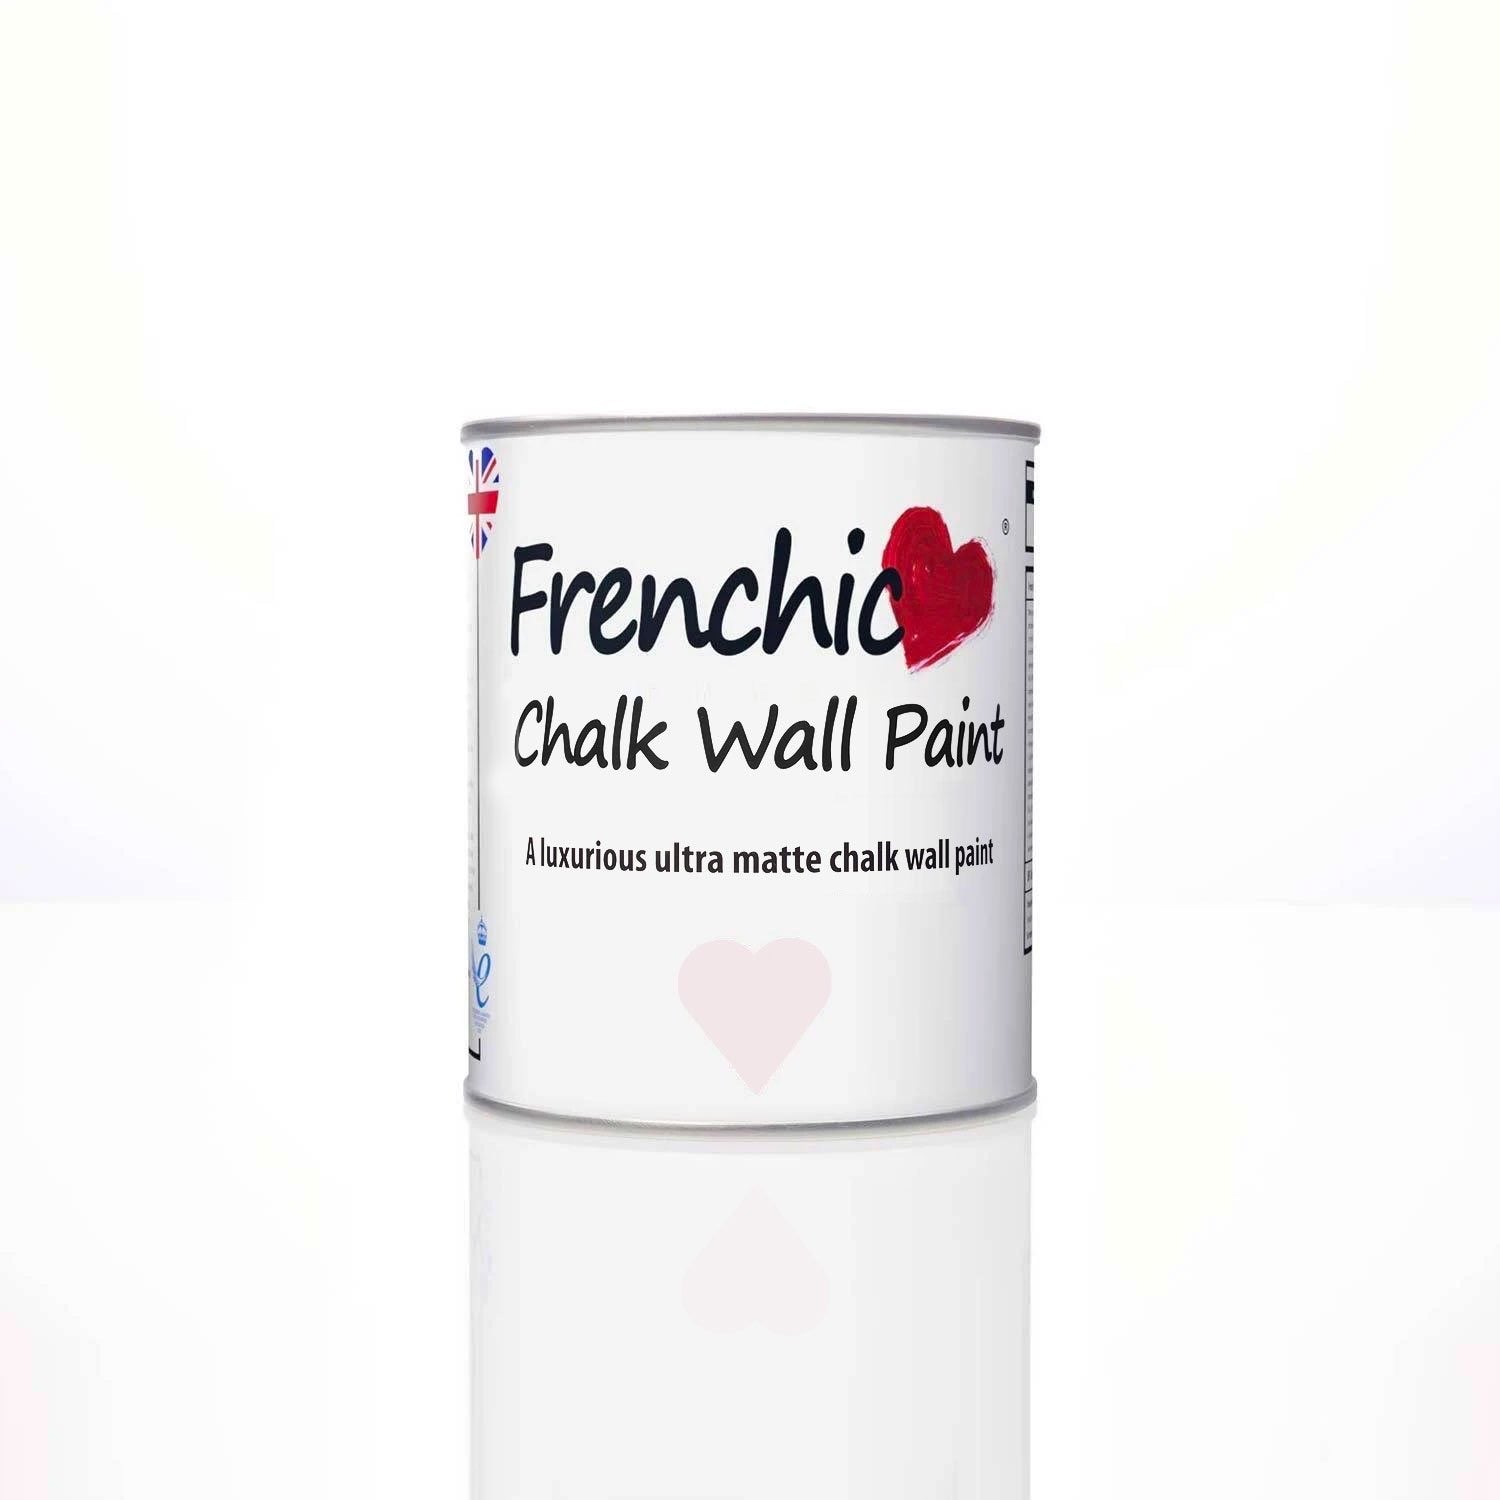 Sweet Cheeks Wall Paint